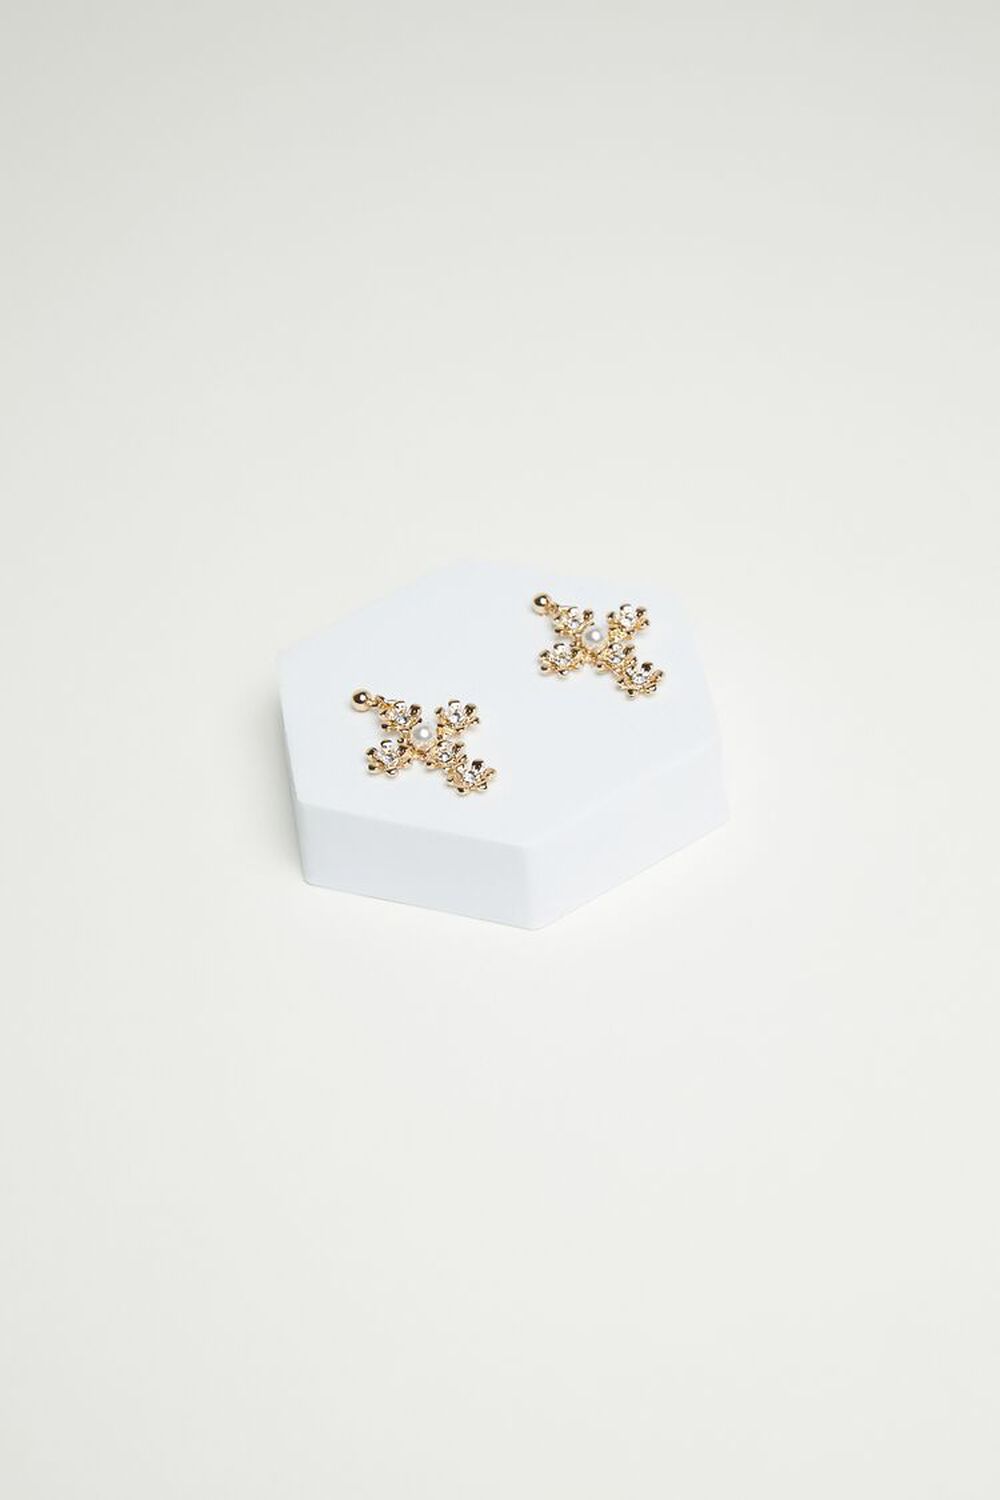 GOLD Floral Cross Drop Earrings, image 1